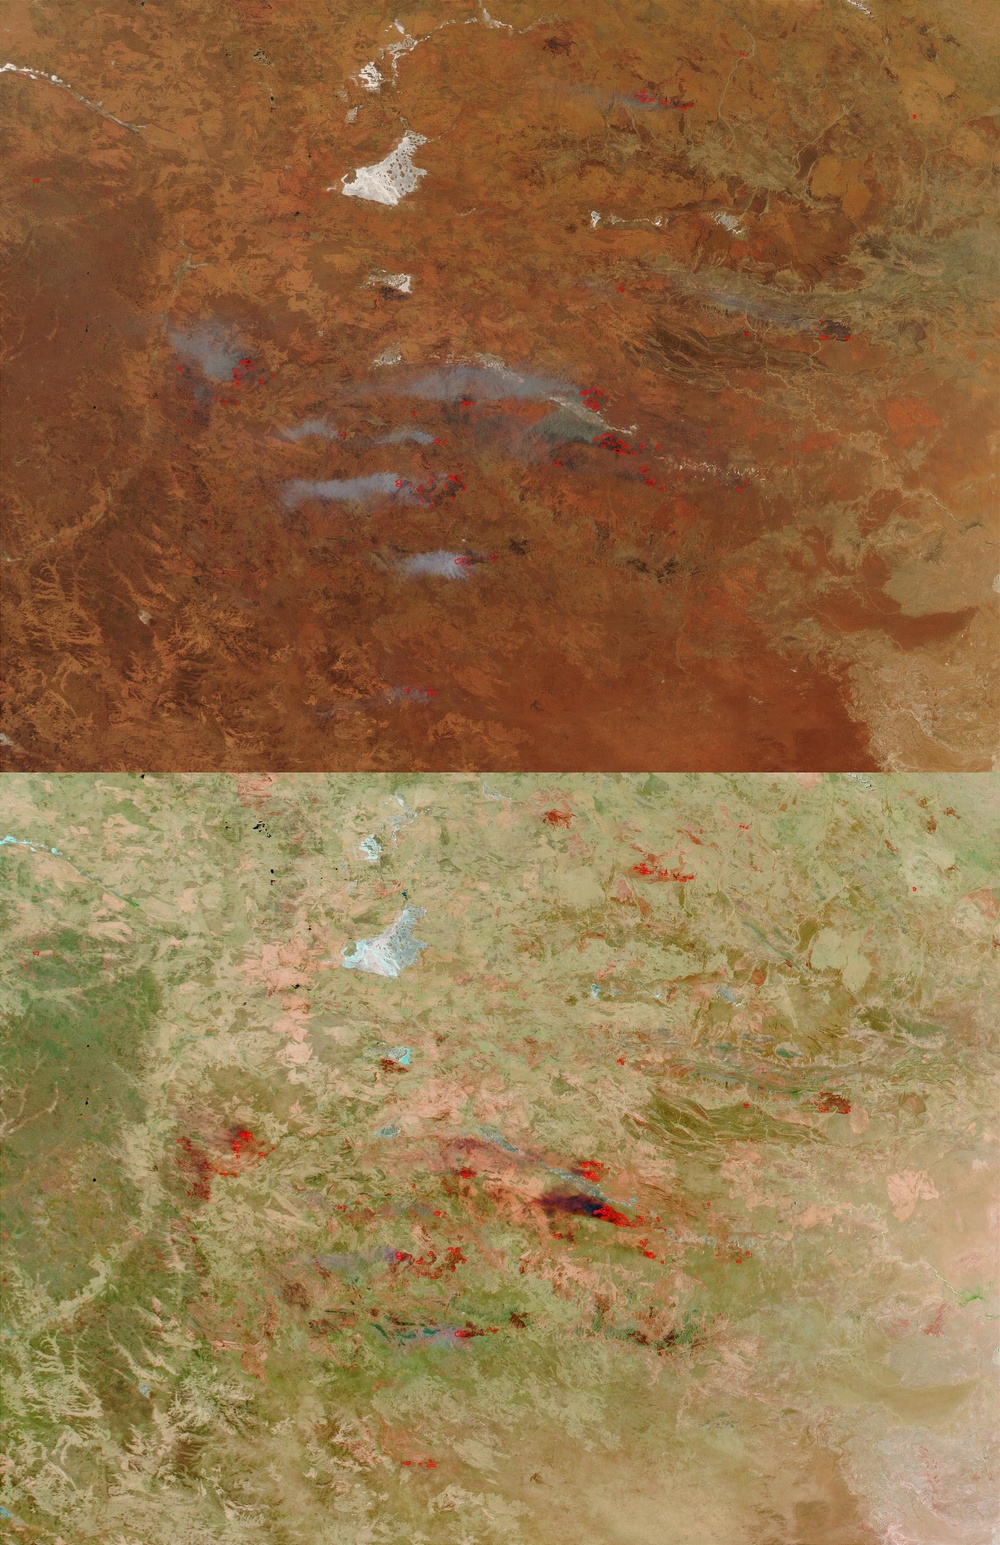 Large Bushfires in Central Australia: Natural Hazards